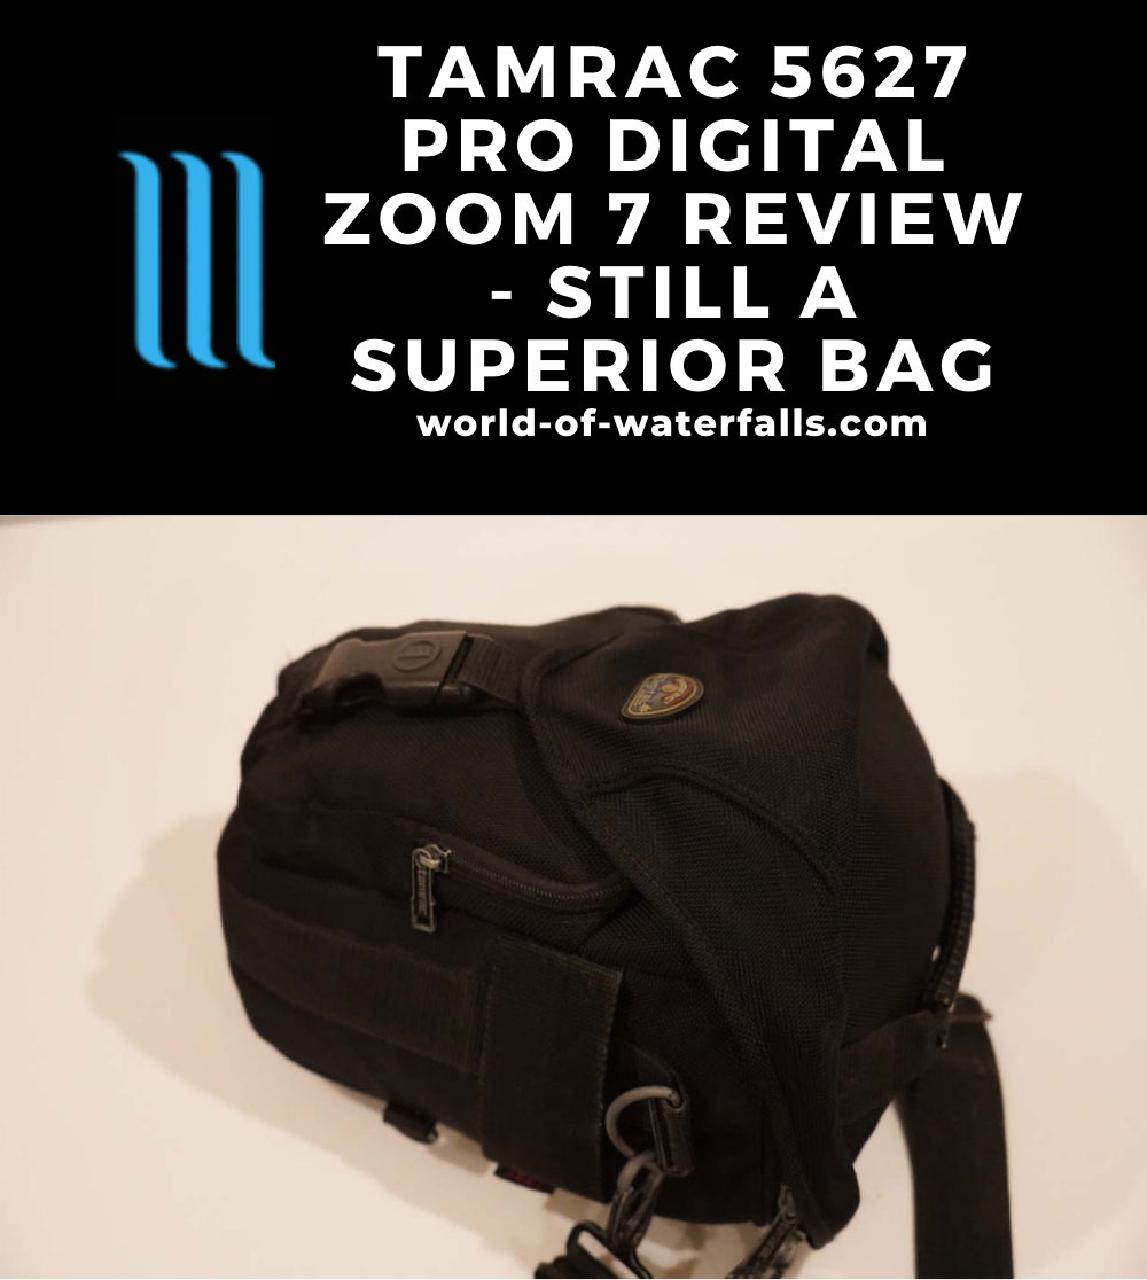 The Tamrac 5627 Pro Digital Zoom 7 Holster Bag